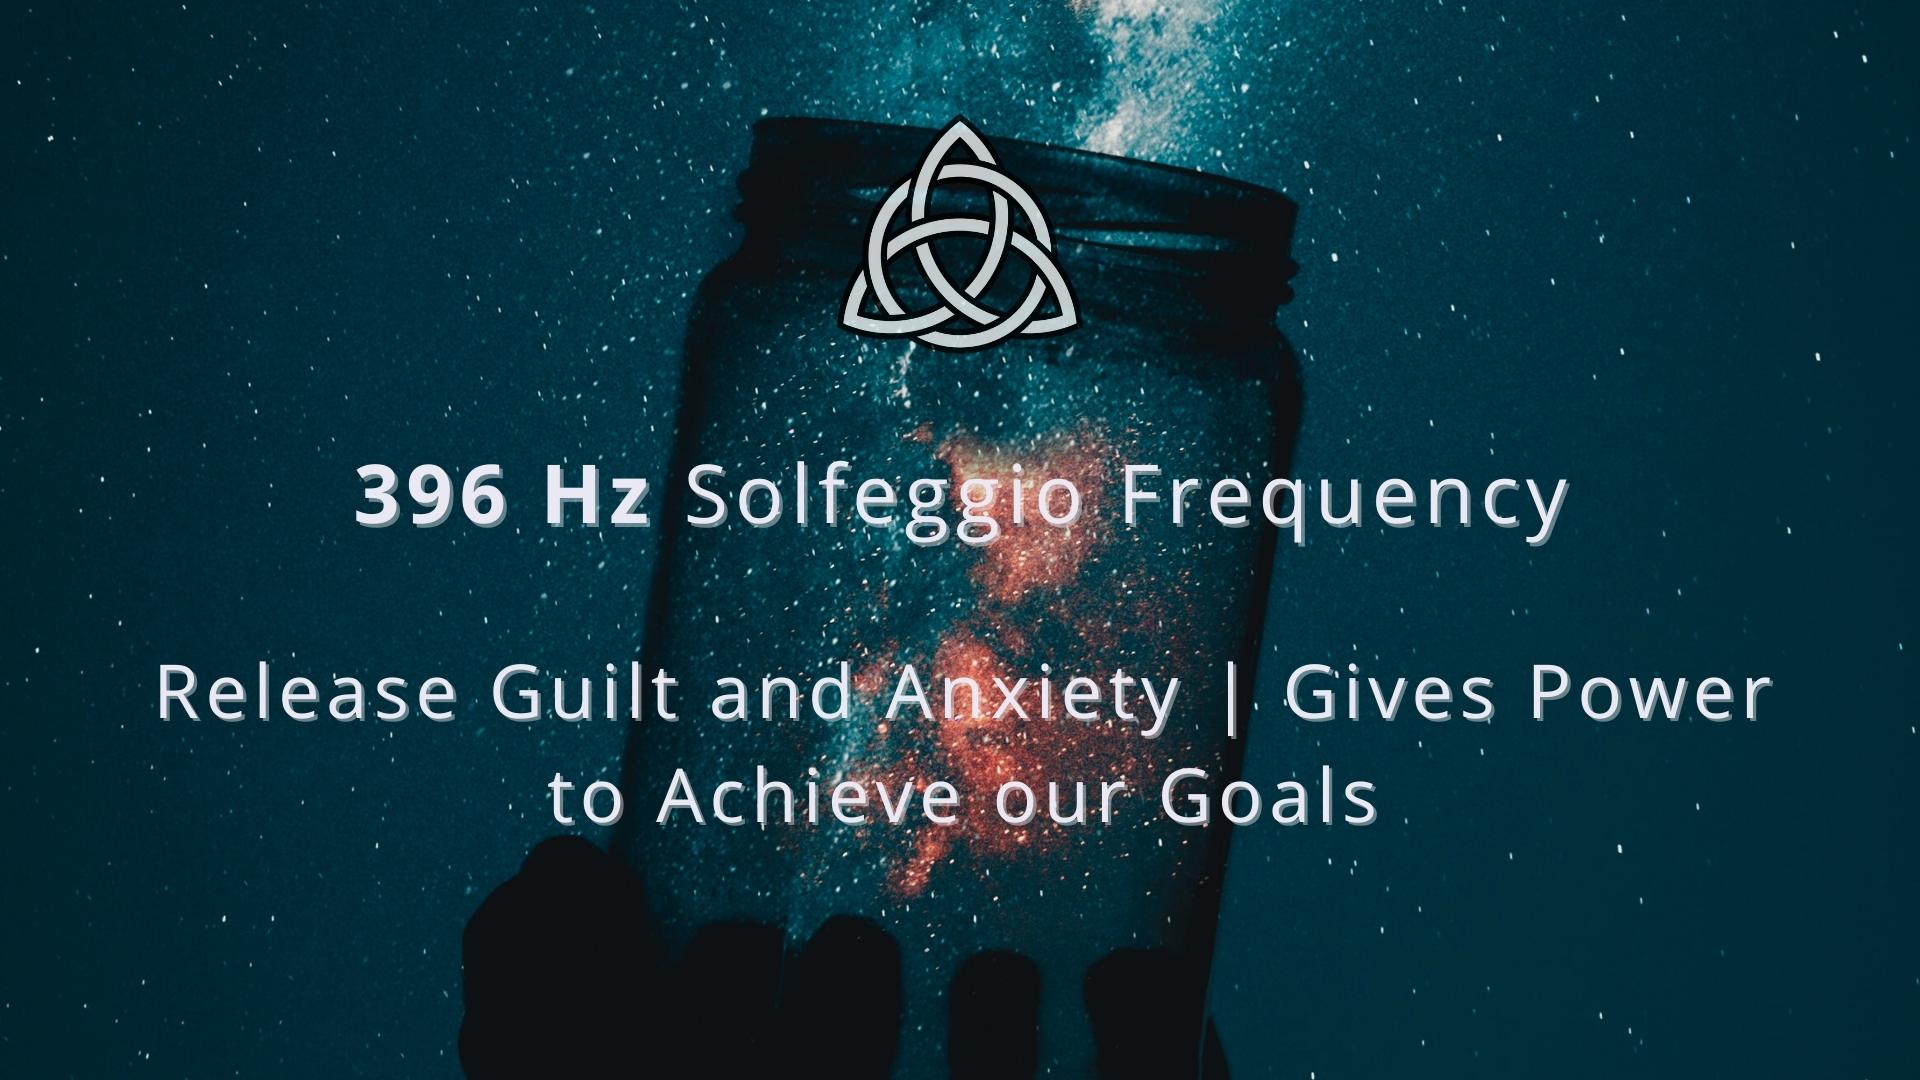 The 396 Hz Solfeggio Frequency